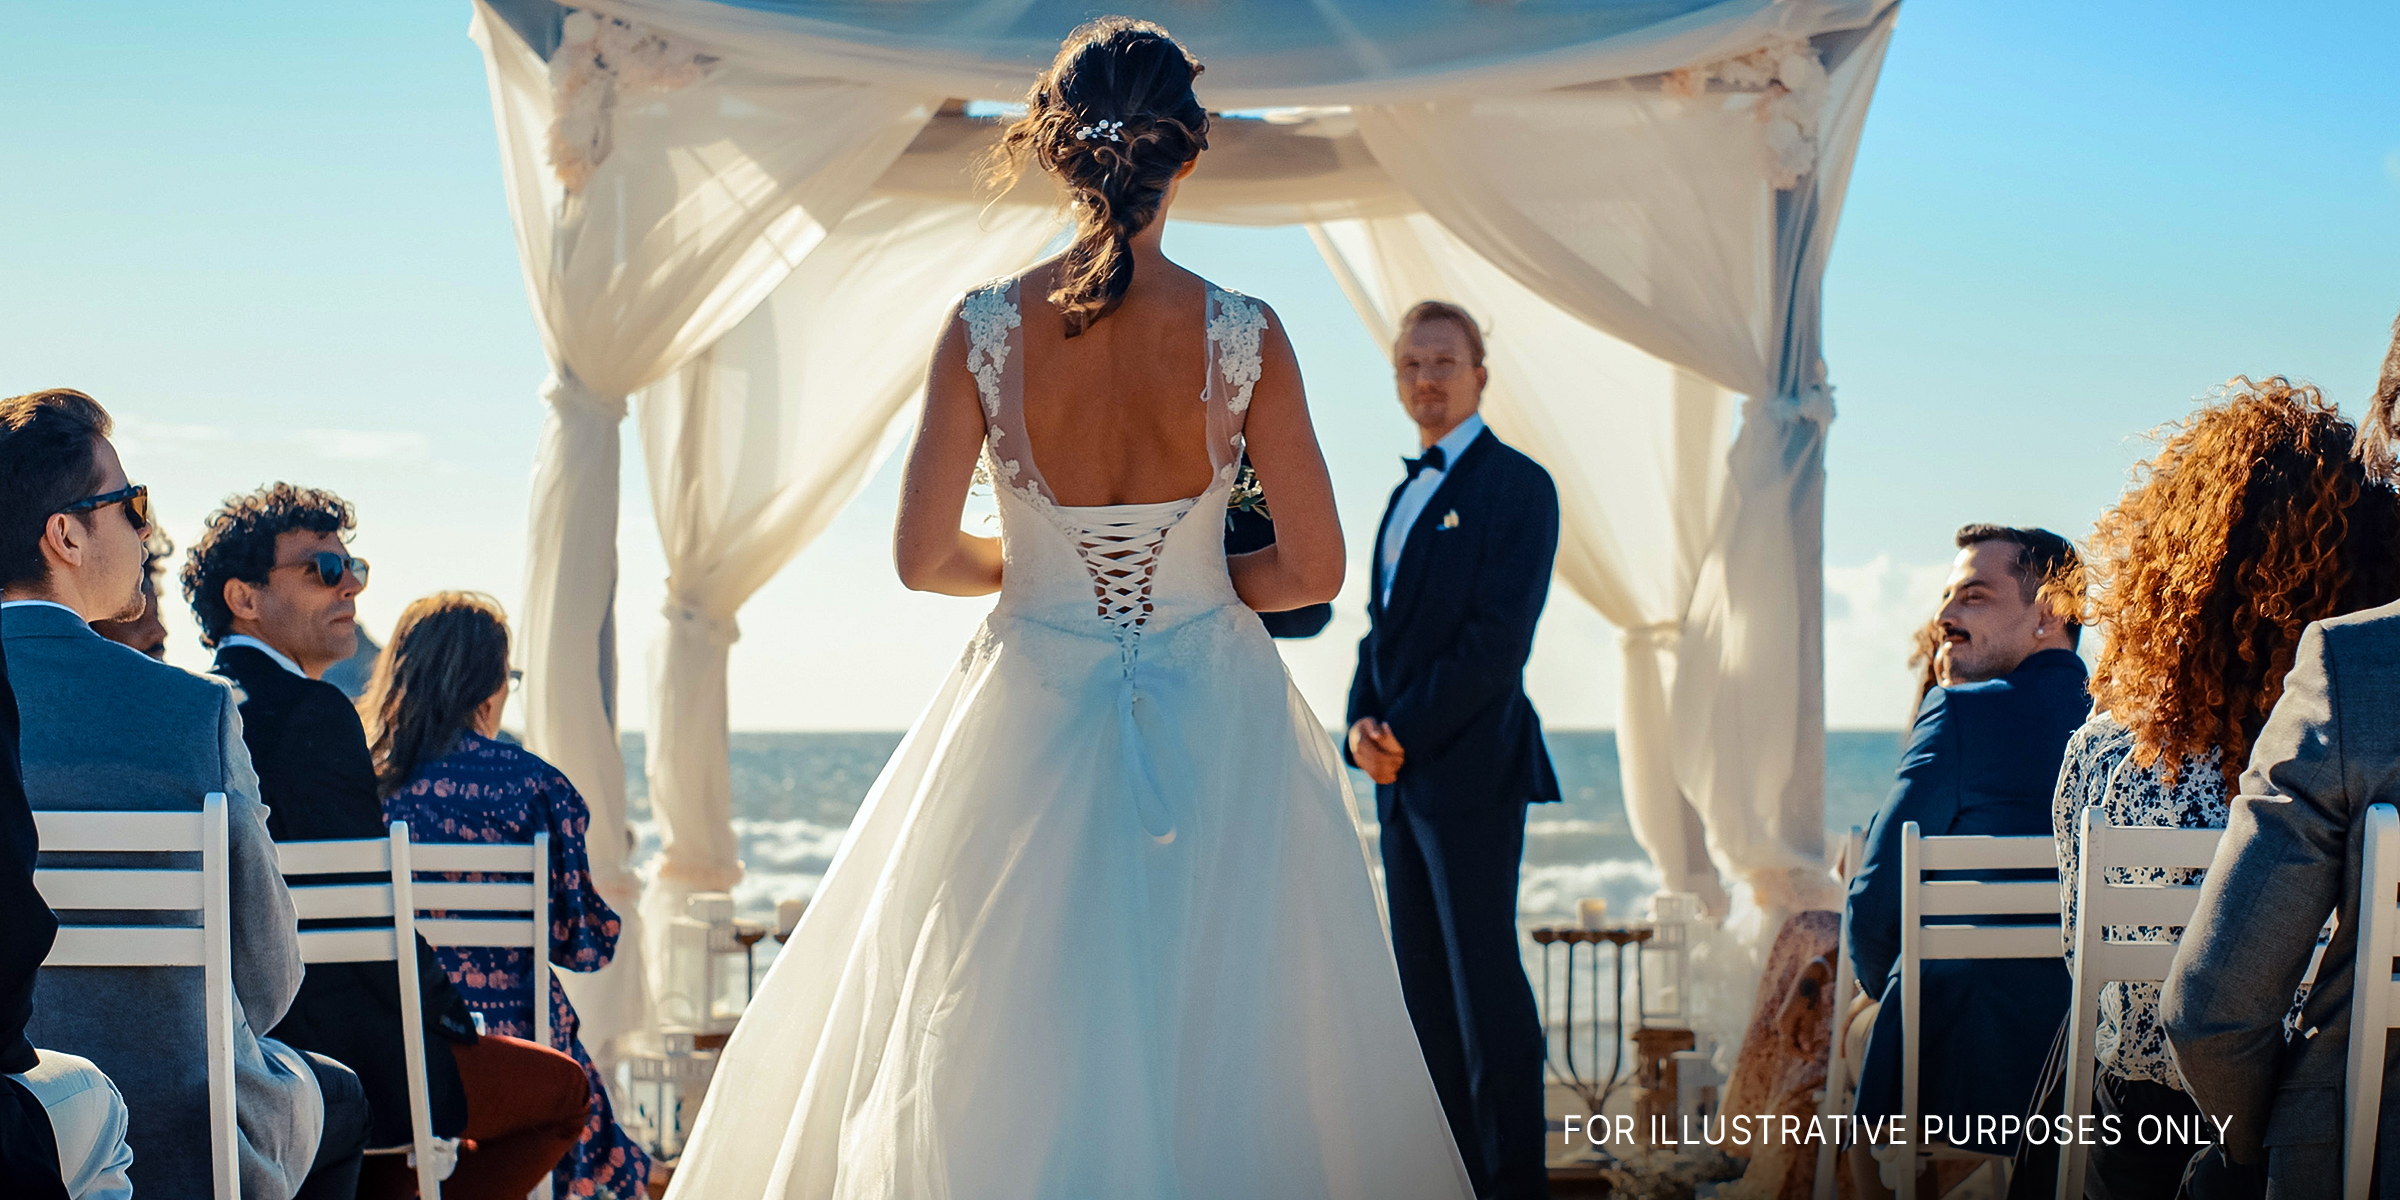 Bride walking down the aisle | Source: Shutterstock